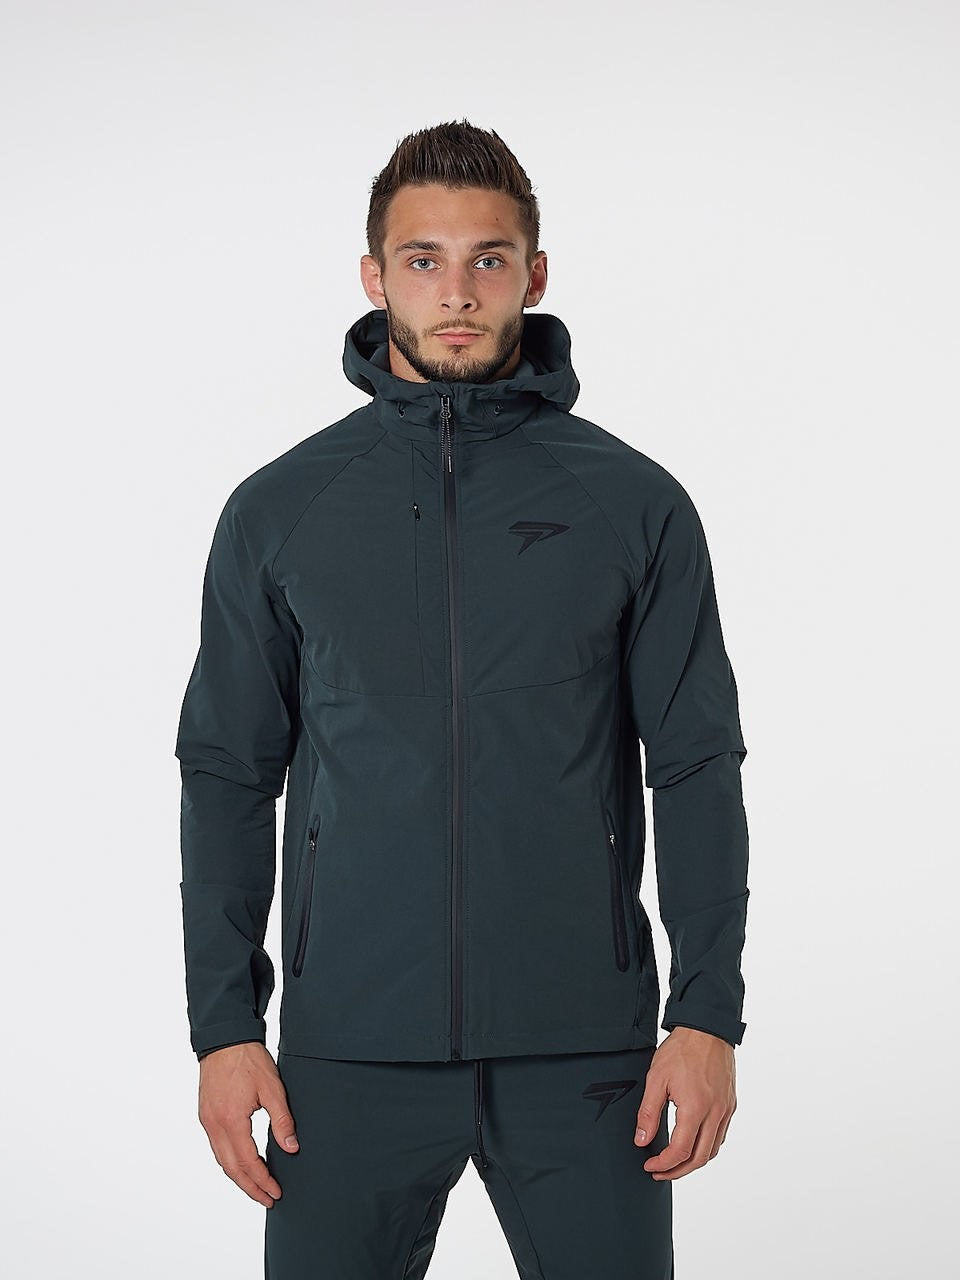 PHYSIQ APPAREL Aero Jacket Men's Zipped Track Top Alpine Green - Activemen Clothing